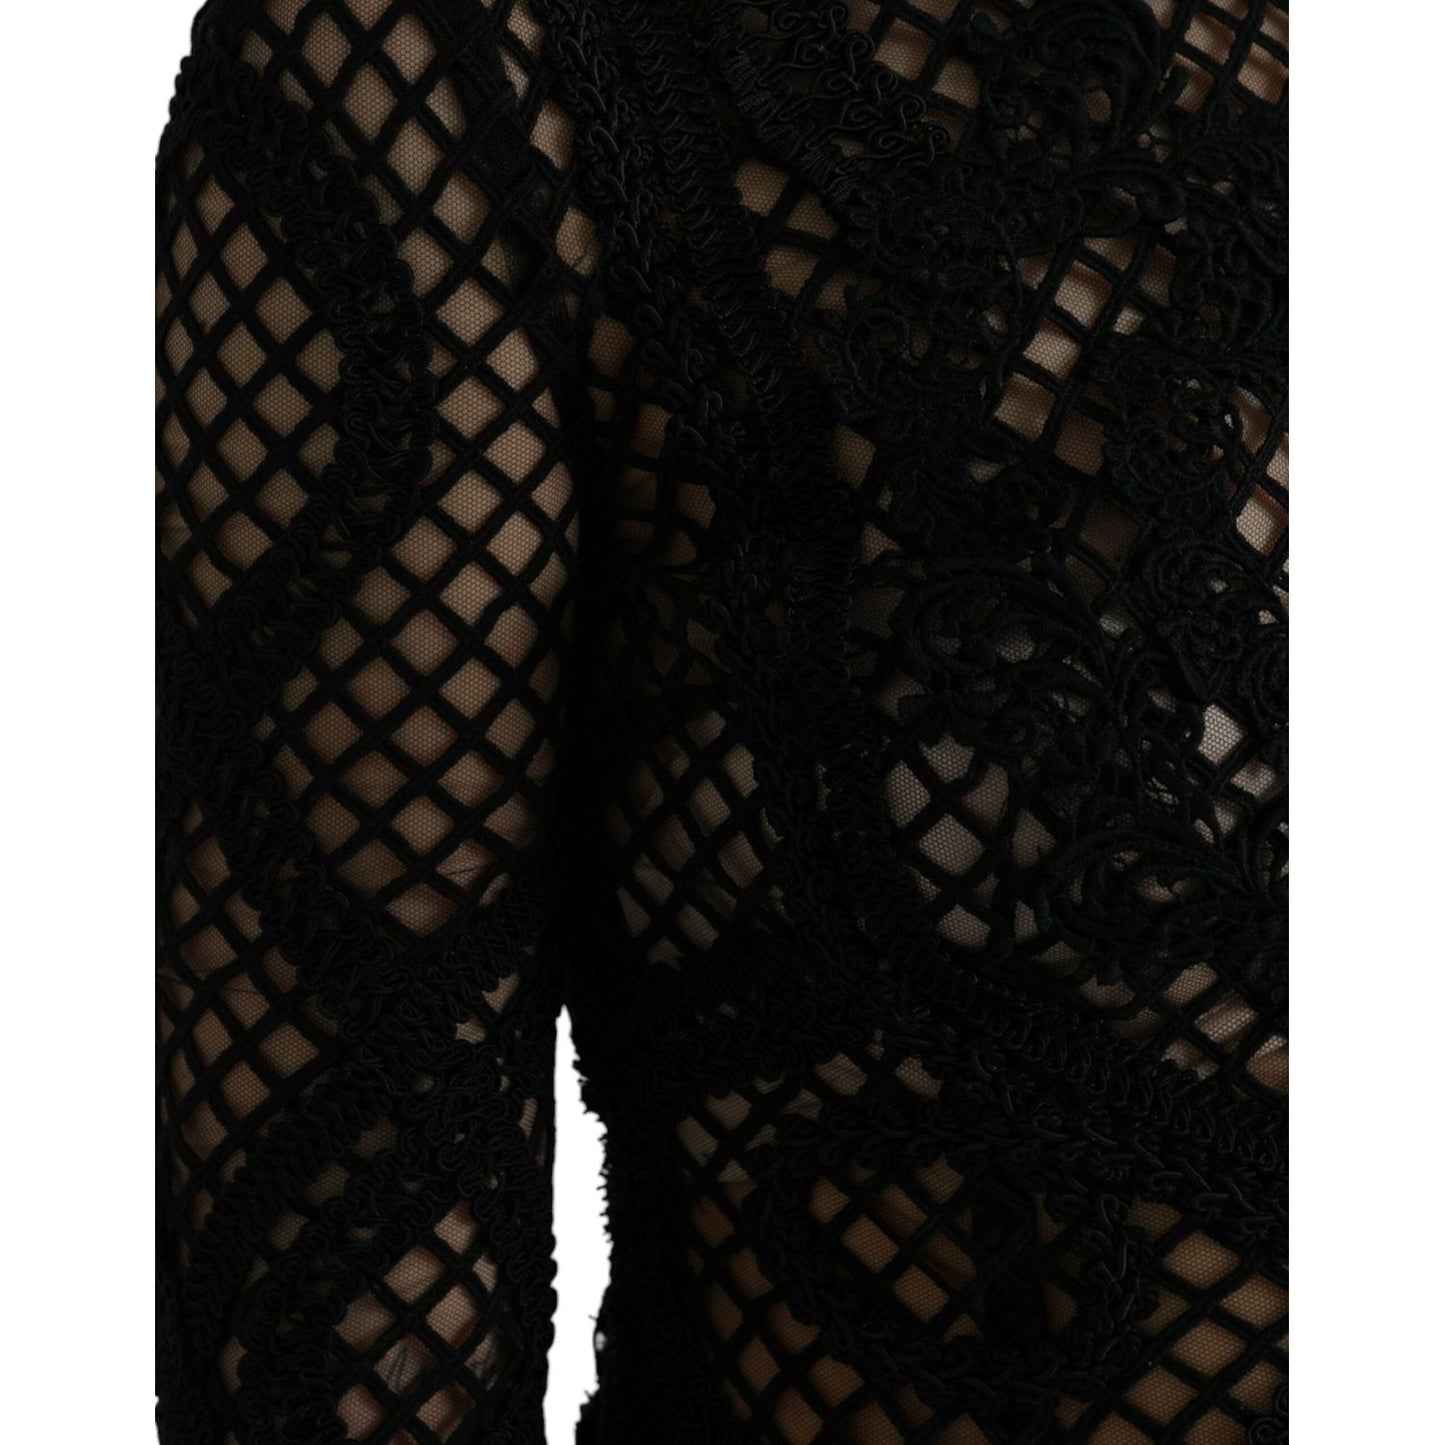 Dolce & Gabbana Black Sheer Long Sleeves Sheath Midi Dress black-sheer-long-sleeves-sheath-midi-dress